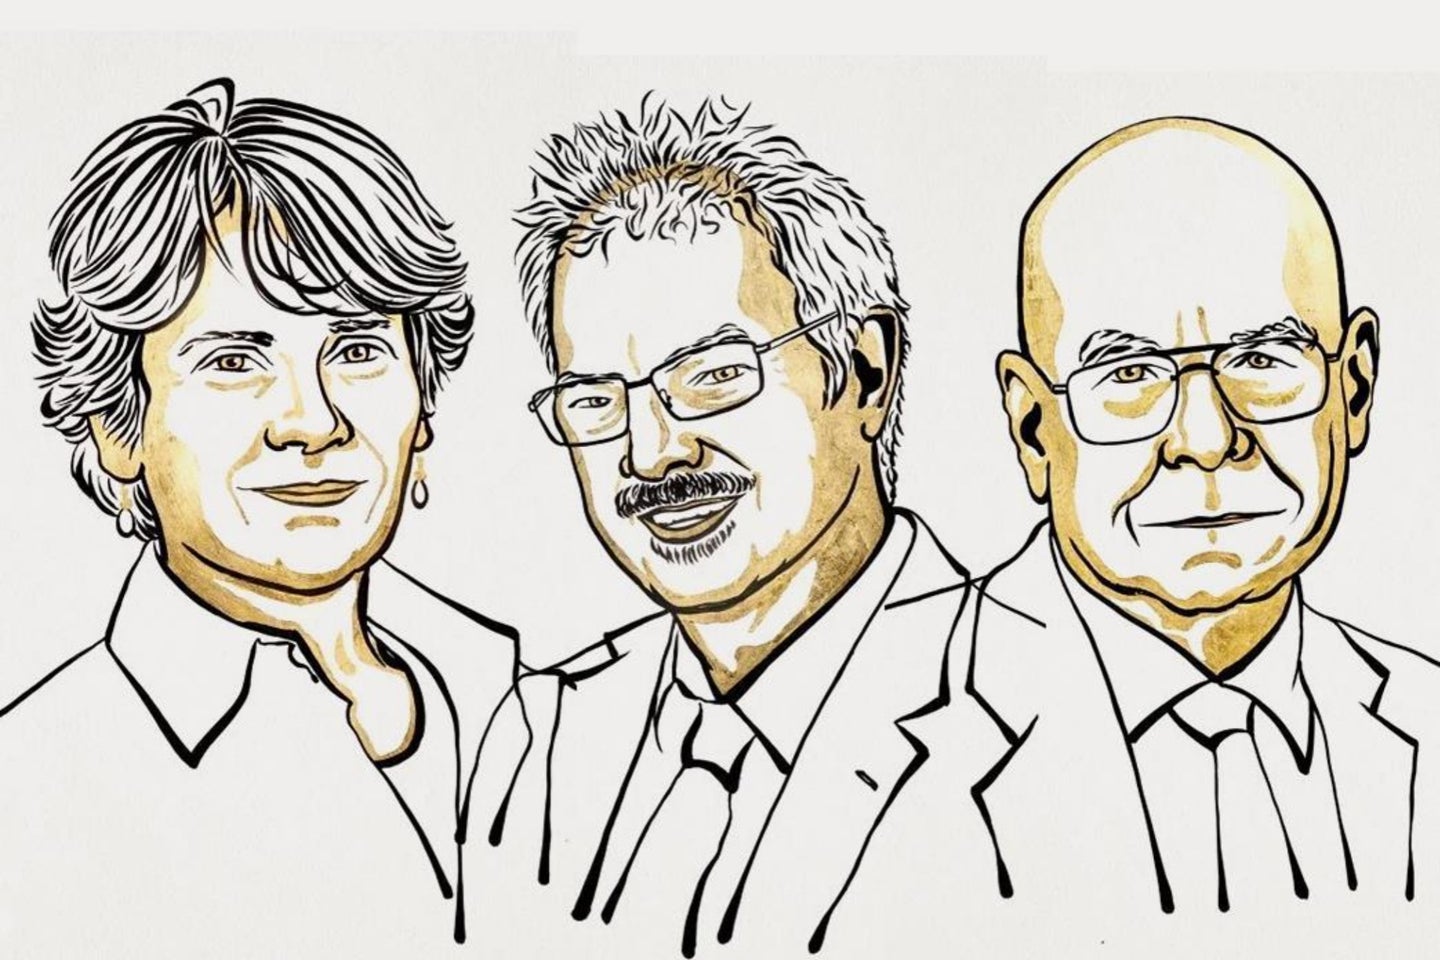 2022 Nobel Prize in Chemistry winners Carolyn Bertozzi, Morten Meldal, and K. Barry Sharpless in a gold and black illustration